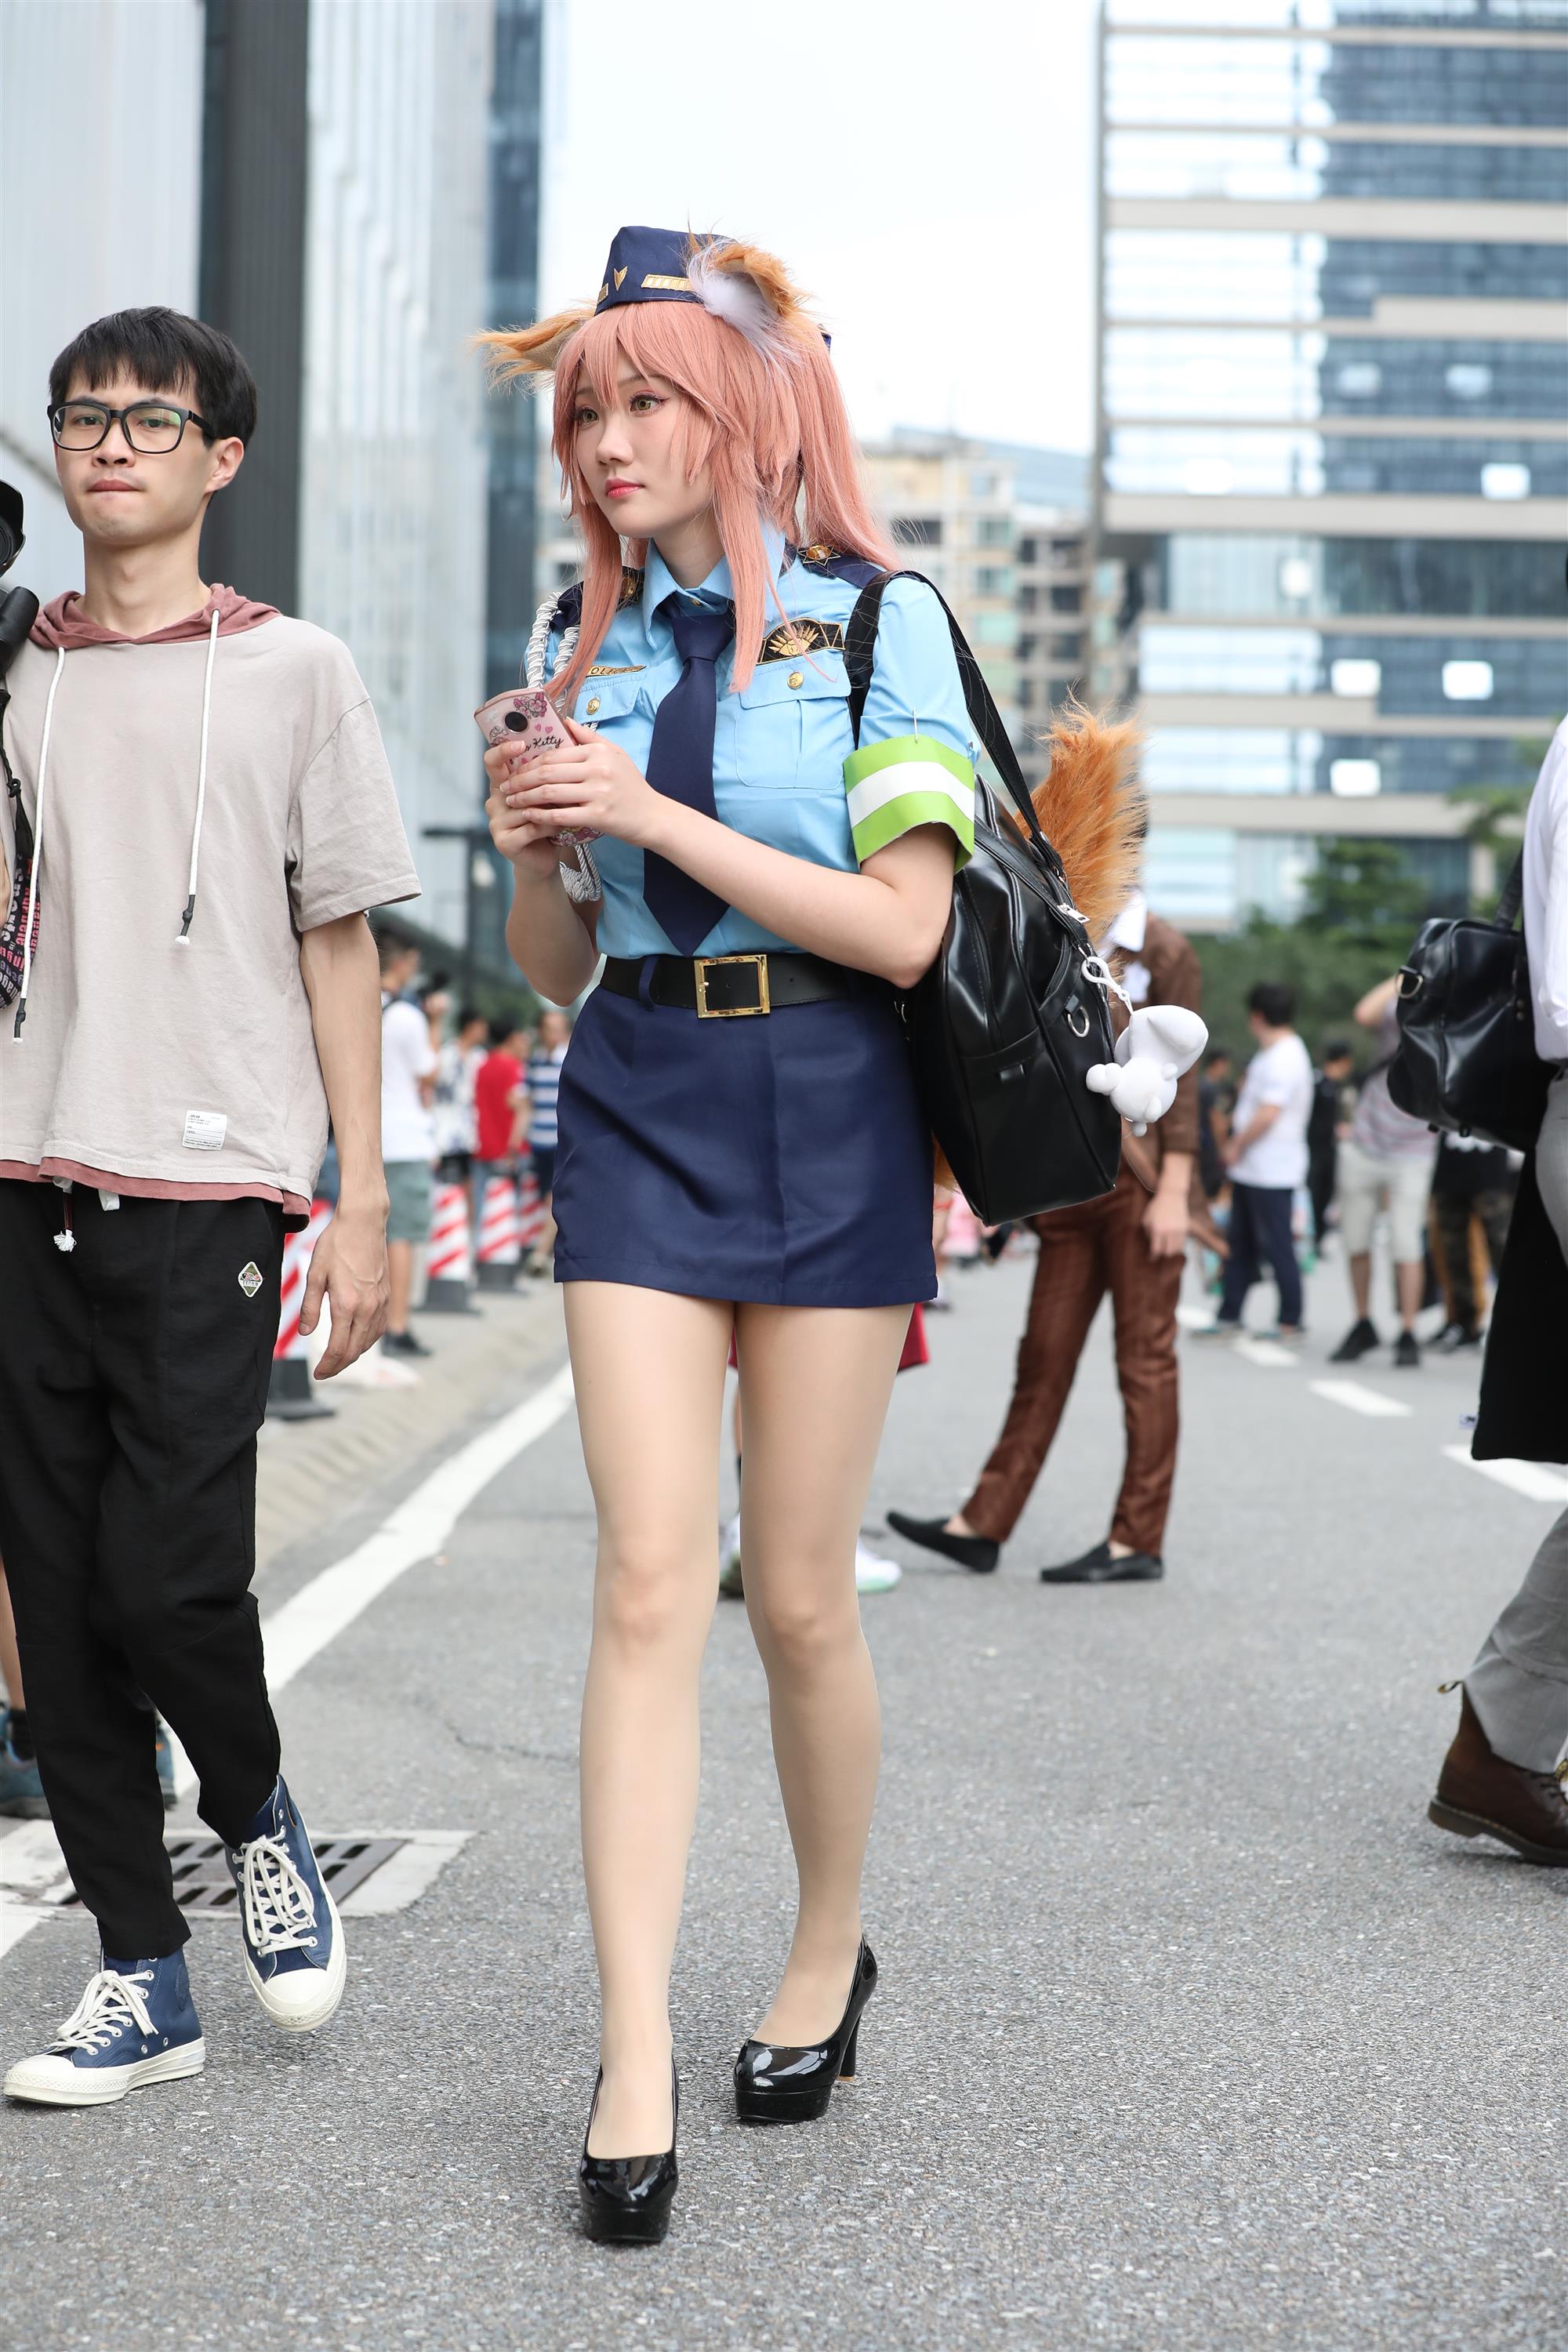 Street cosplay girl - 21.jpg